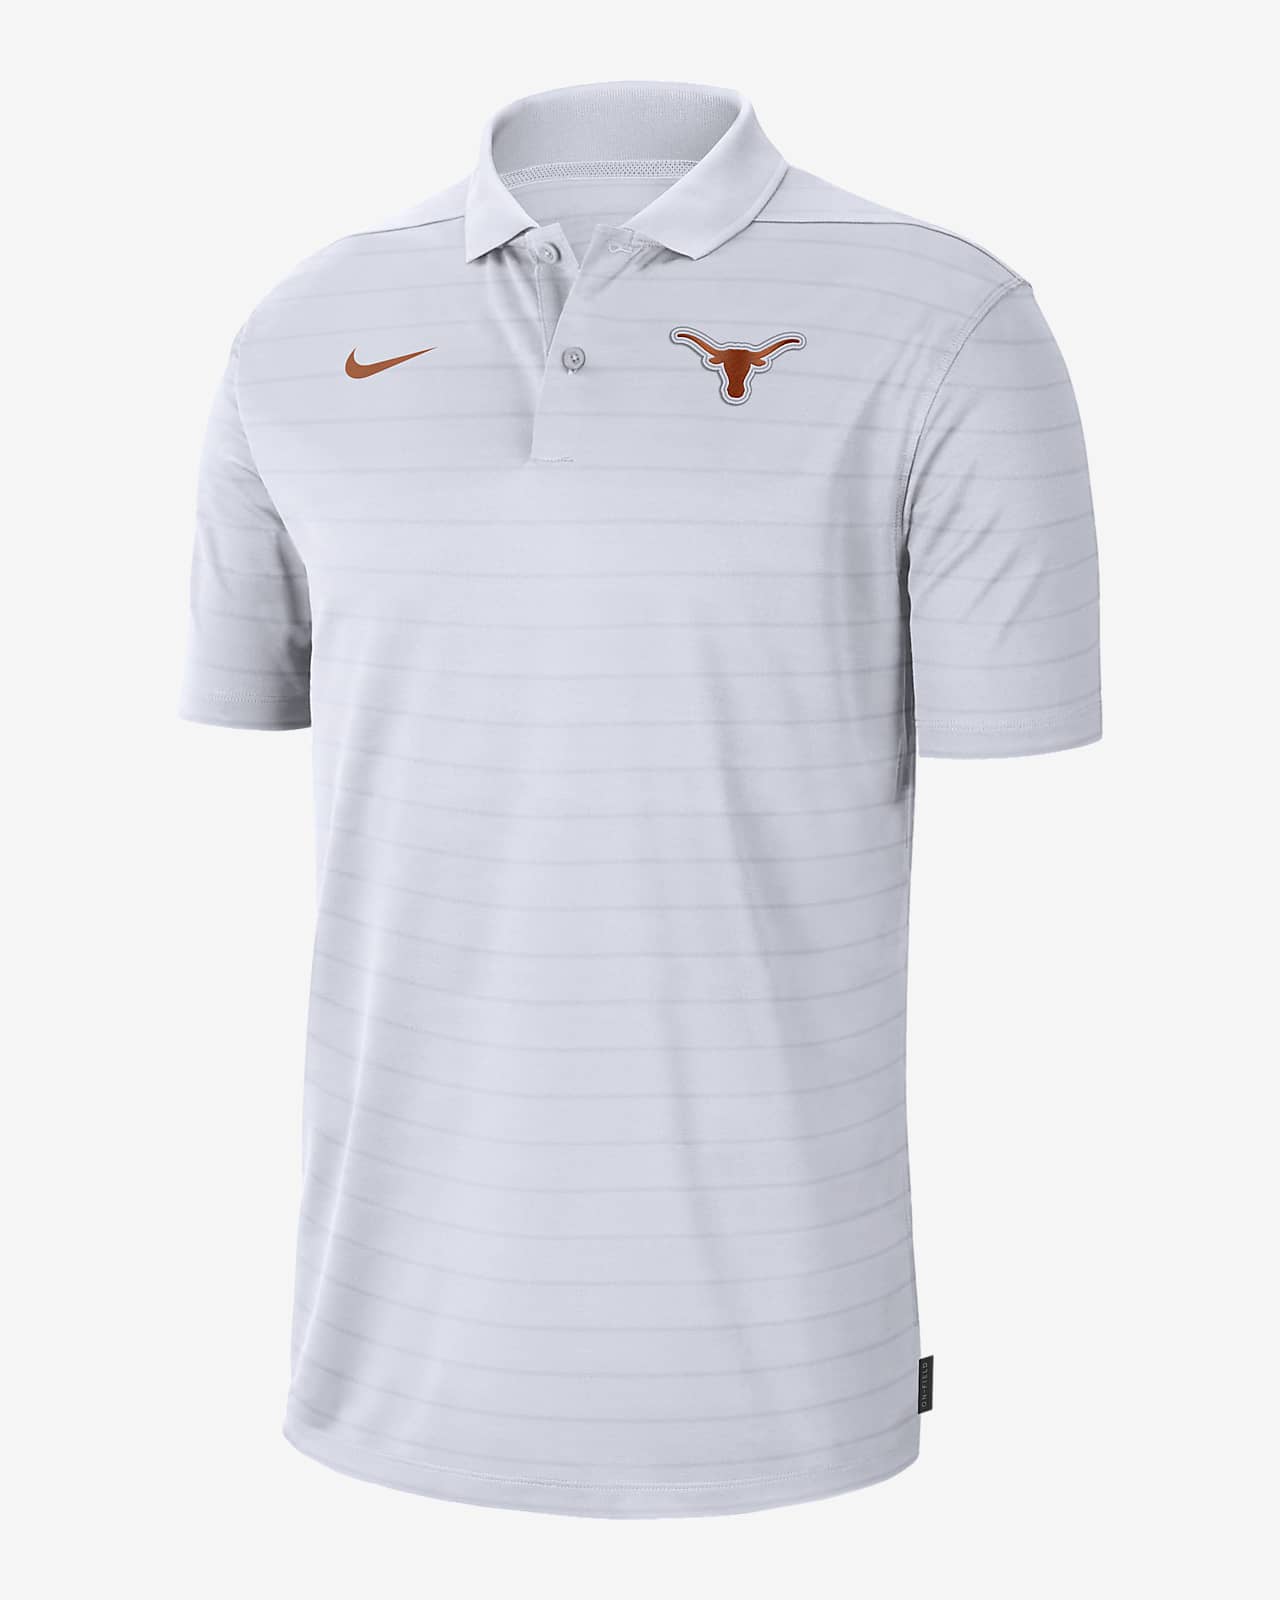 Nike College (Texas) Men’s Polo